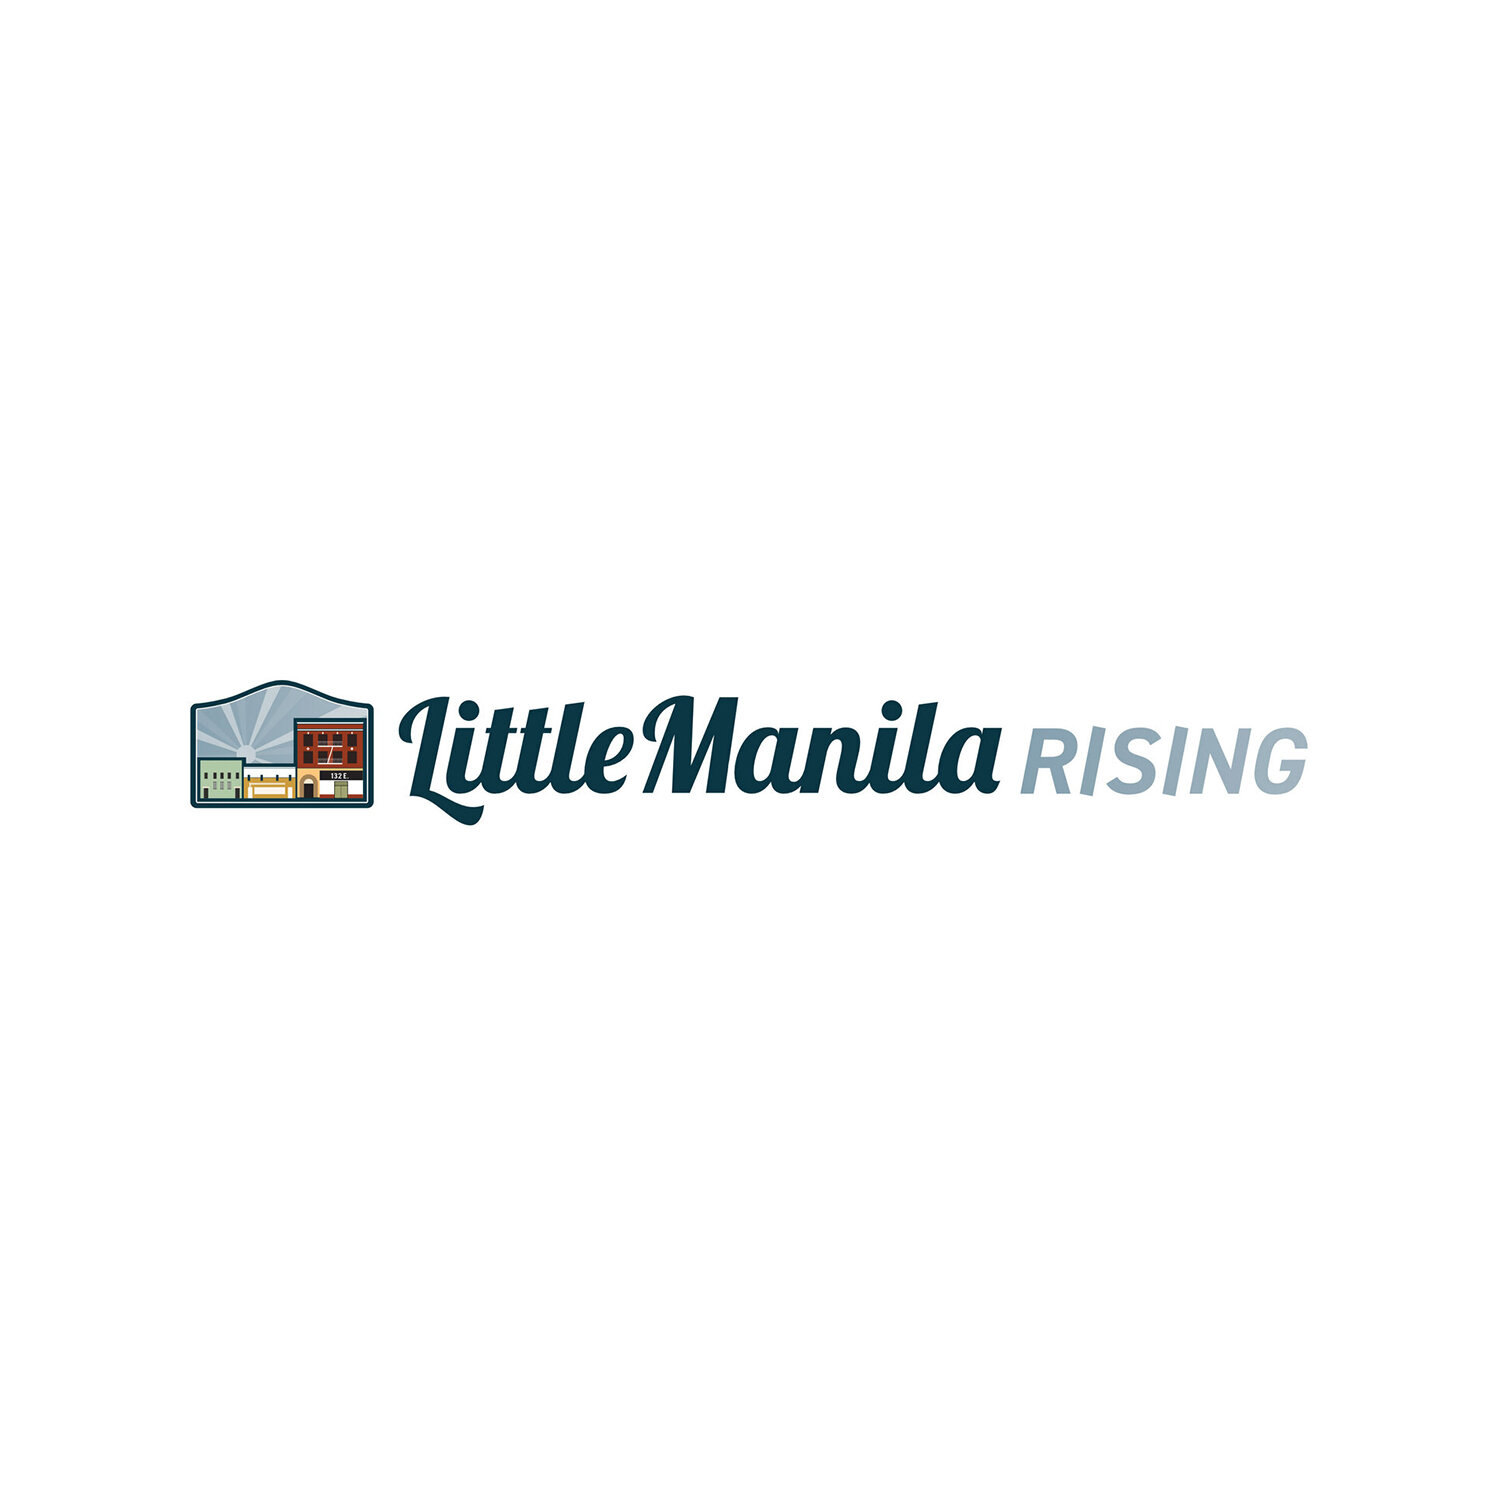 little-manila-rising-logo-1500px.jpg